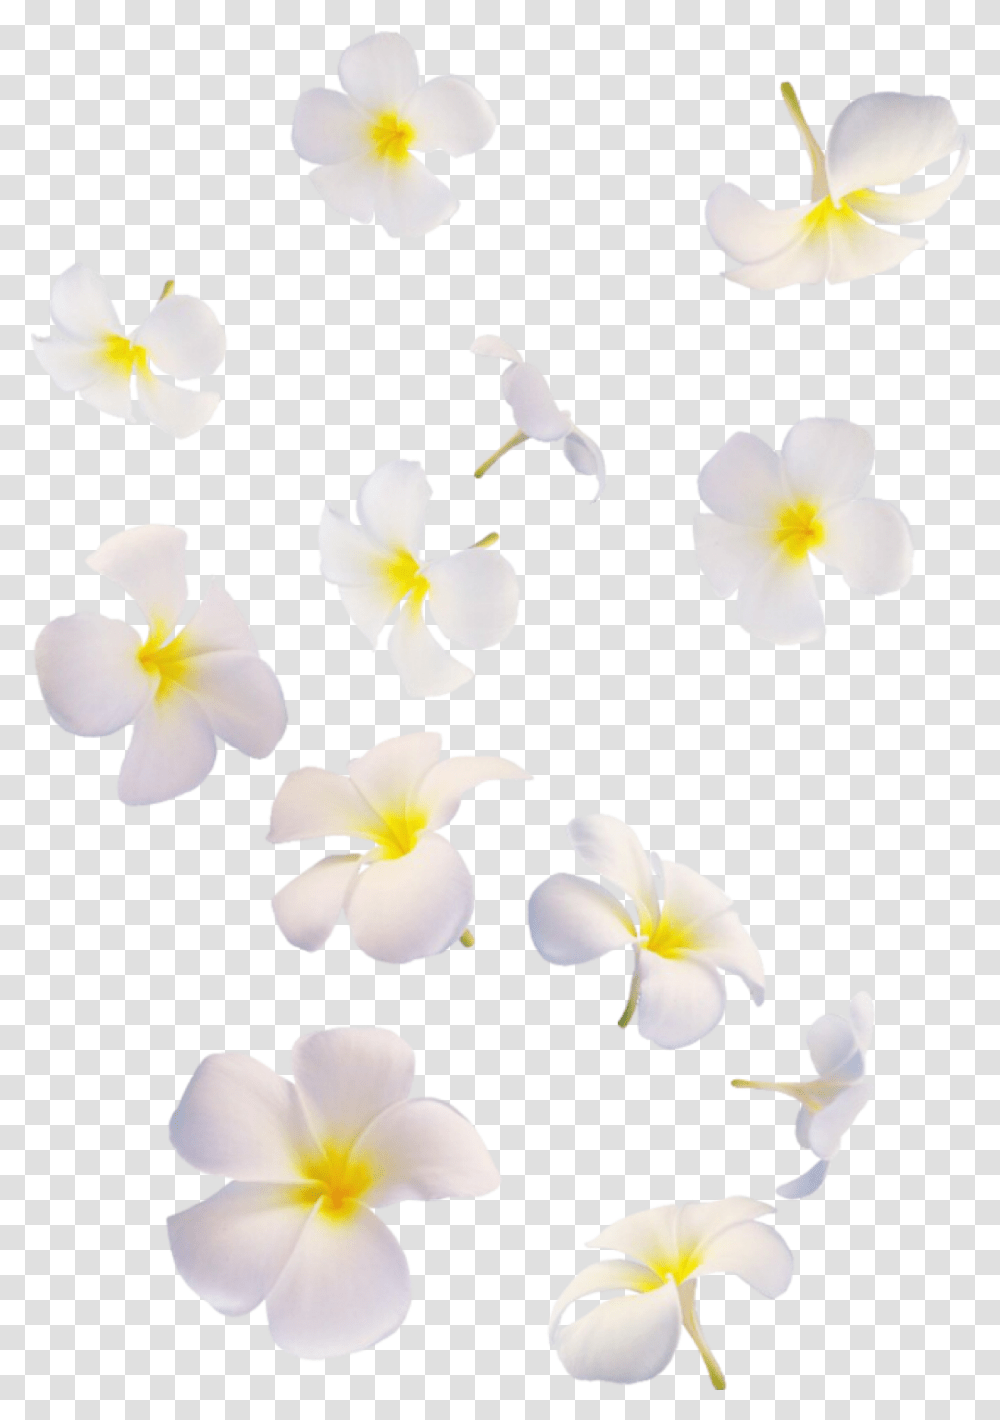 Falling White Flowers Flowers White Falling, Petal, Plant, Blossom, Geranium Transparent Png